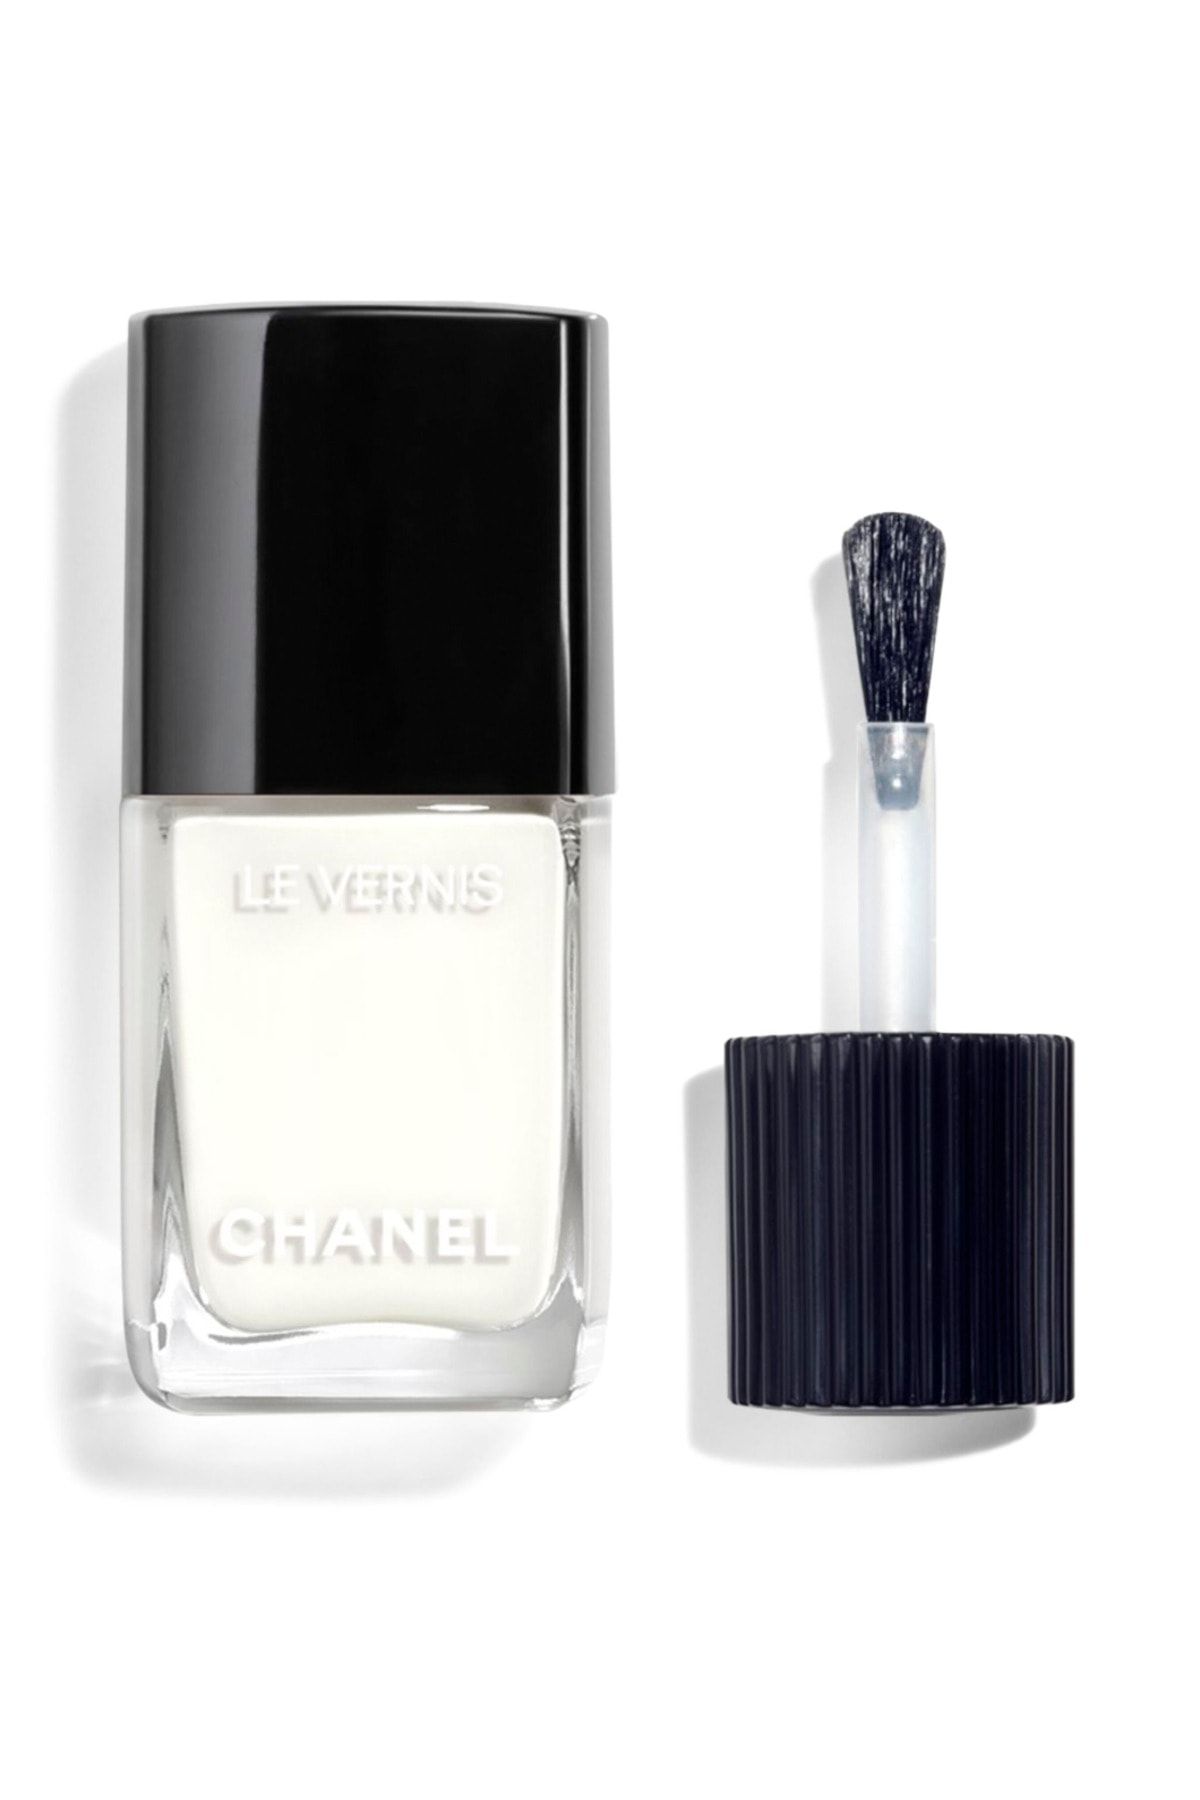 Chanel LE VERNIS Longwear Nail Color 13 Ml